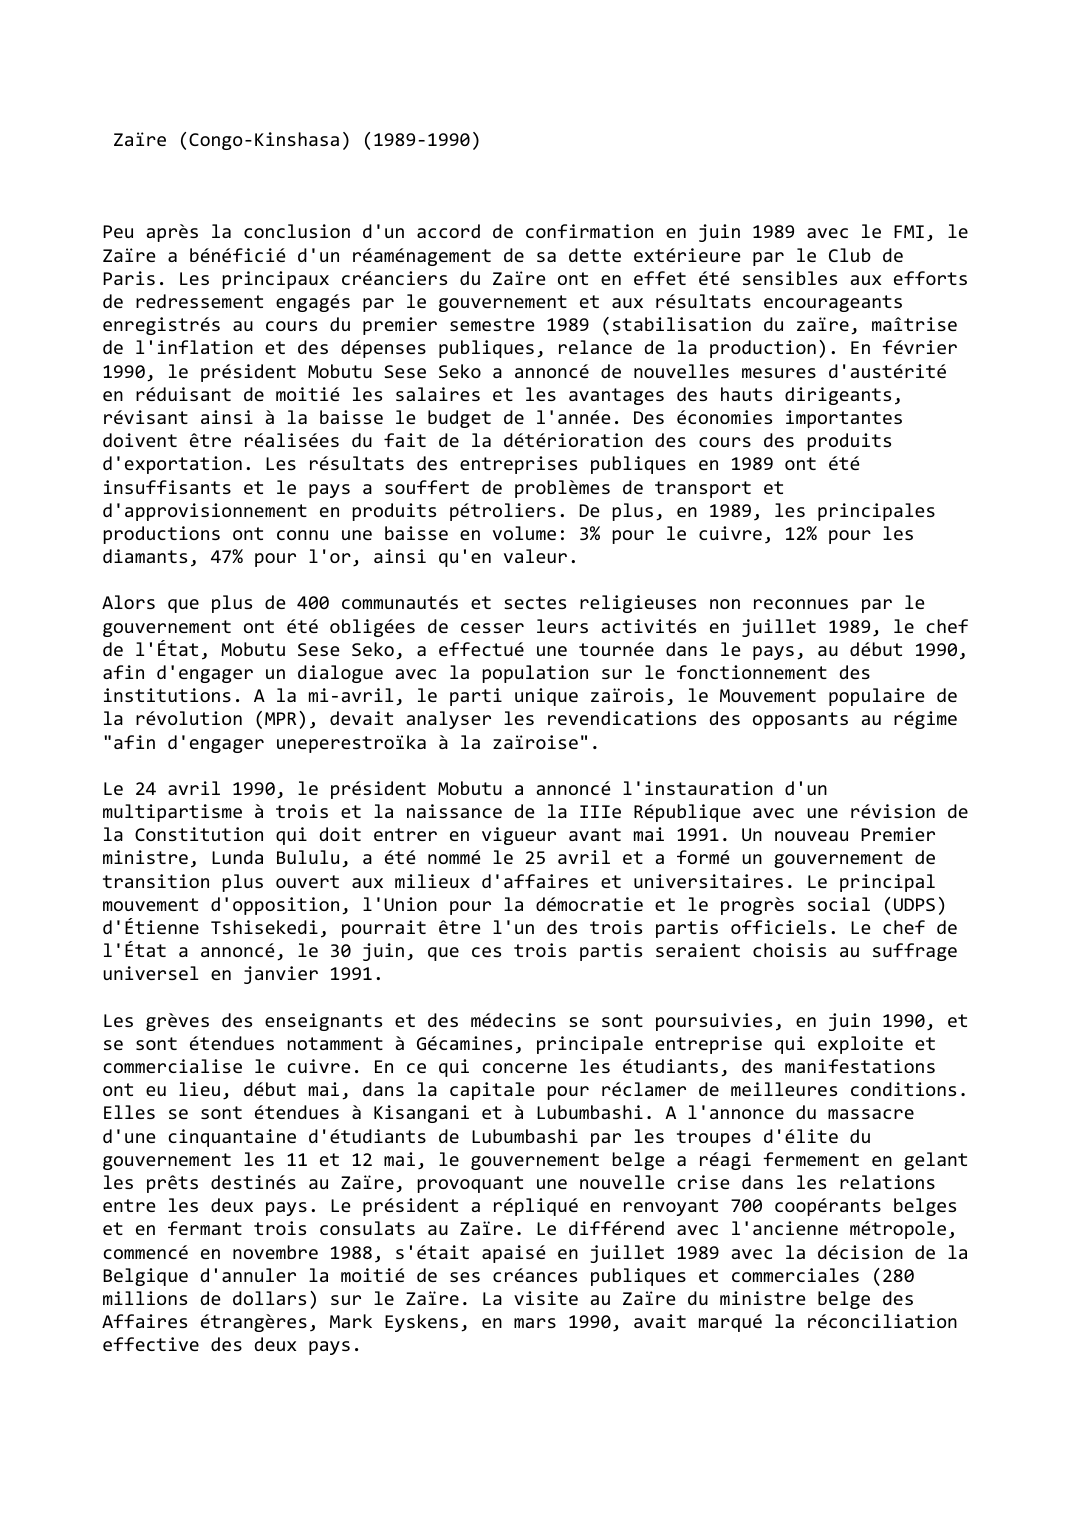 Prévisualisation du document Zaïre (Congo-Kinshasa) (1989-1990)